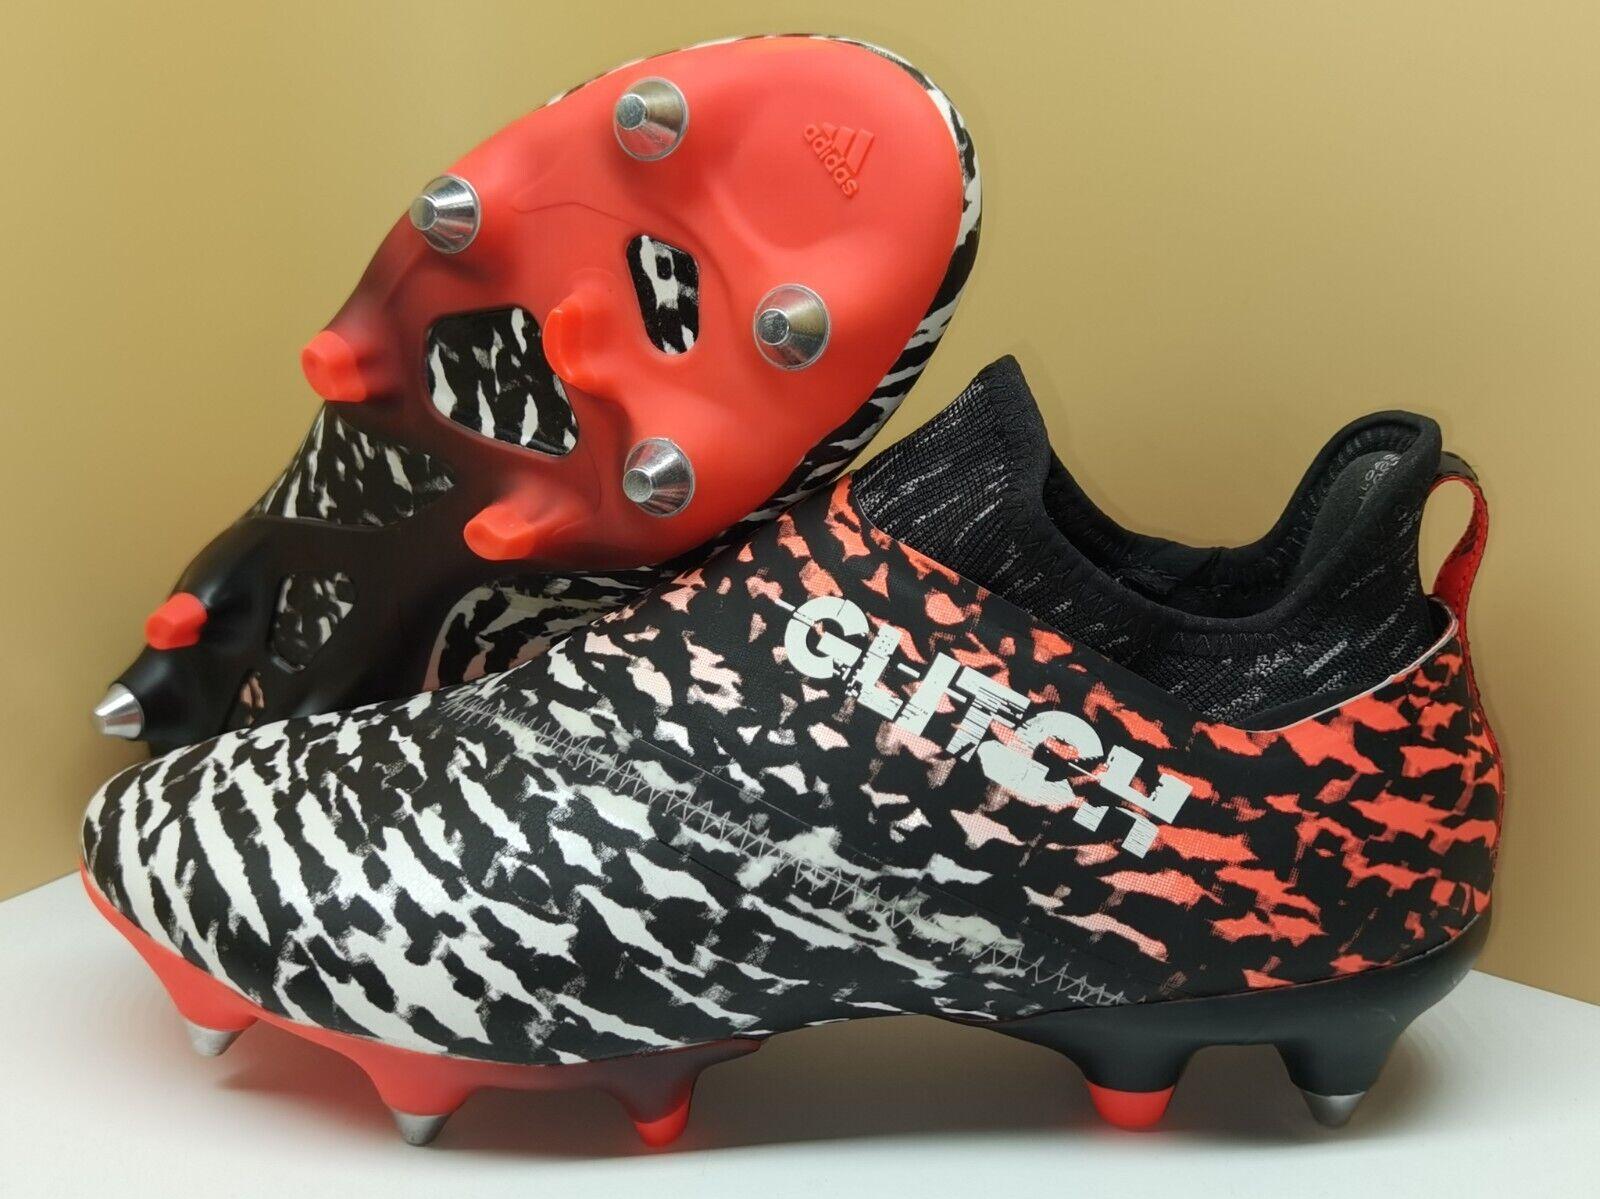 Adidas Glitch Sg Football Boots Soccer Cleats